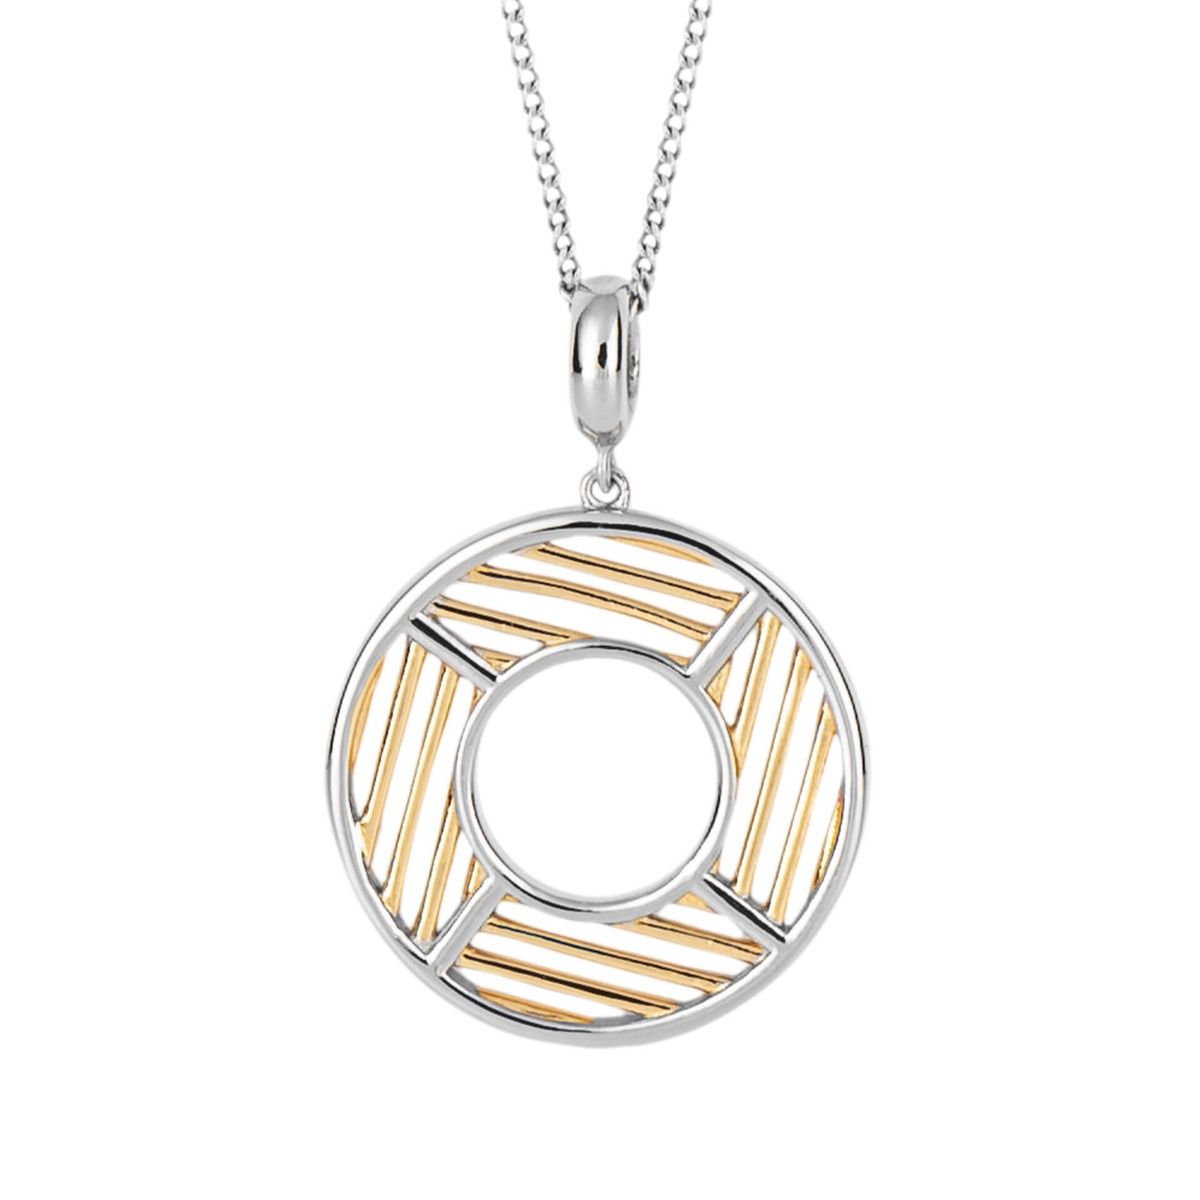 Fiorelli round two tone sterling silver necklace pendant